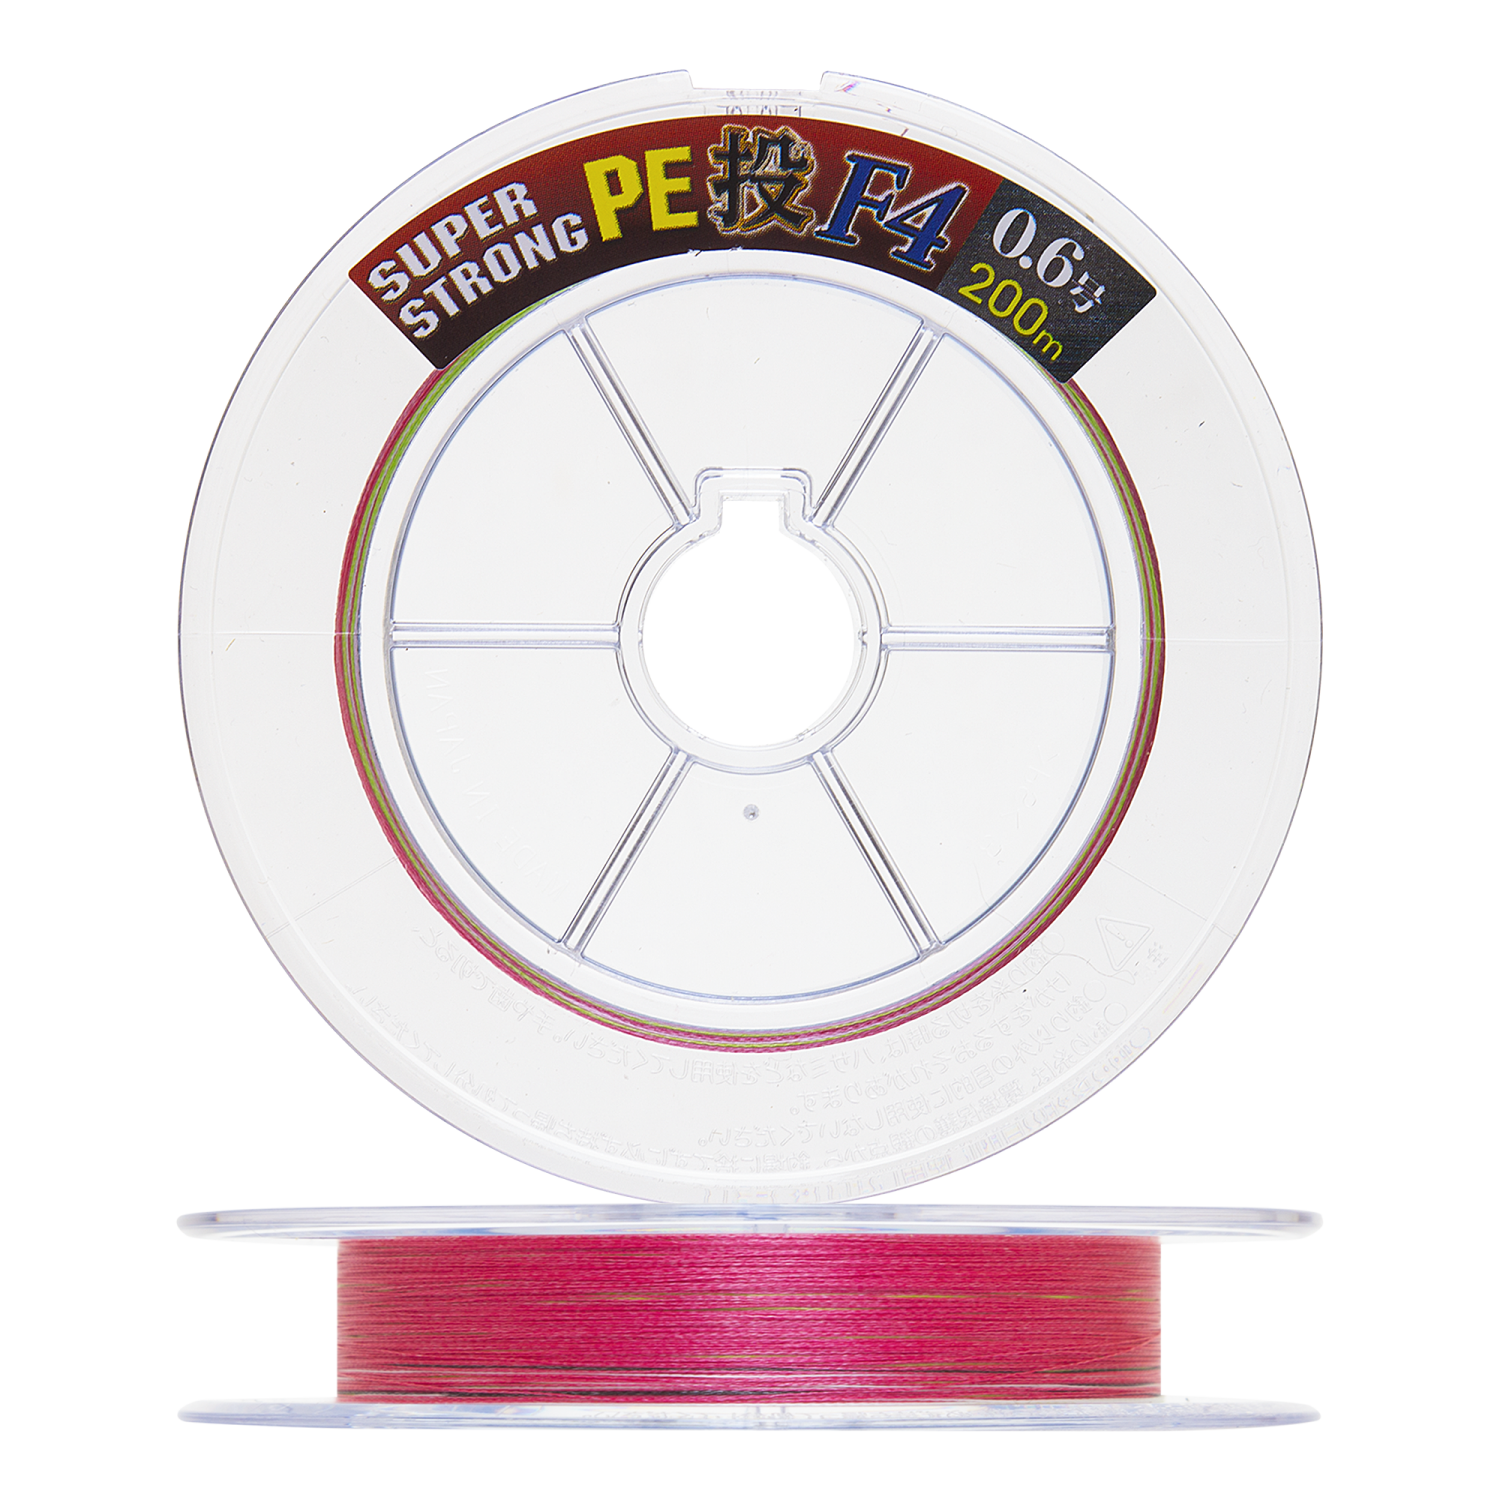 Шнур плетеный Toray Super Strong PE Nage F4 #0,6 200м (multicolor)